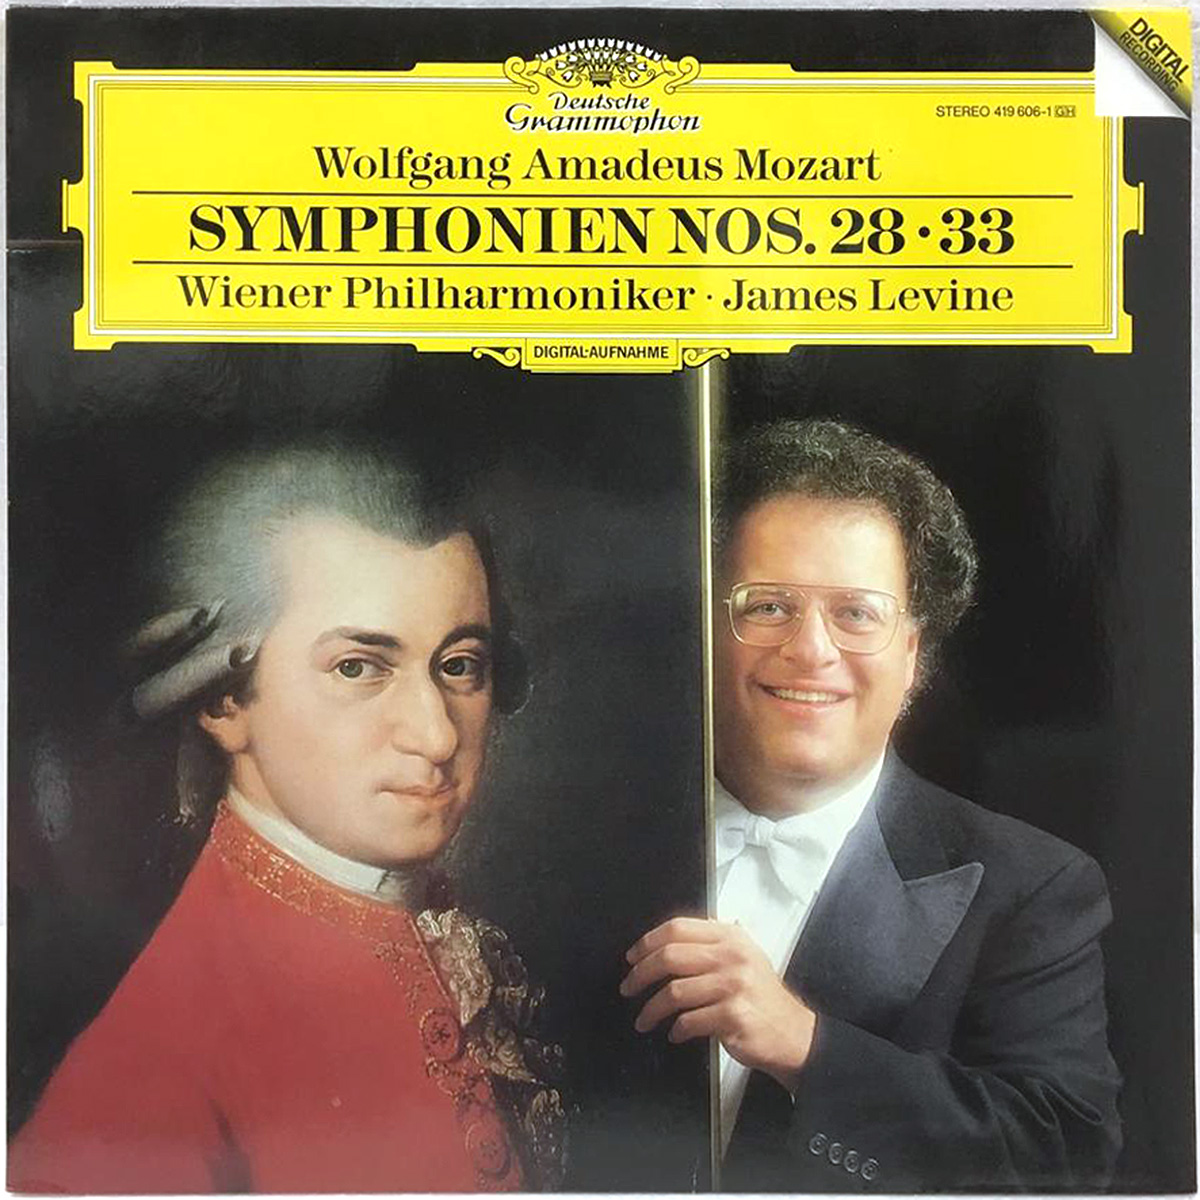 DGG 419 606 Mozart Symphonies 28 33 Levine DGG Digital Aufnahme